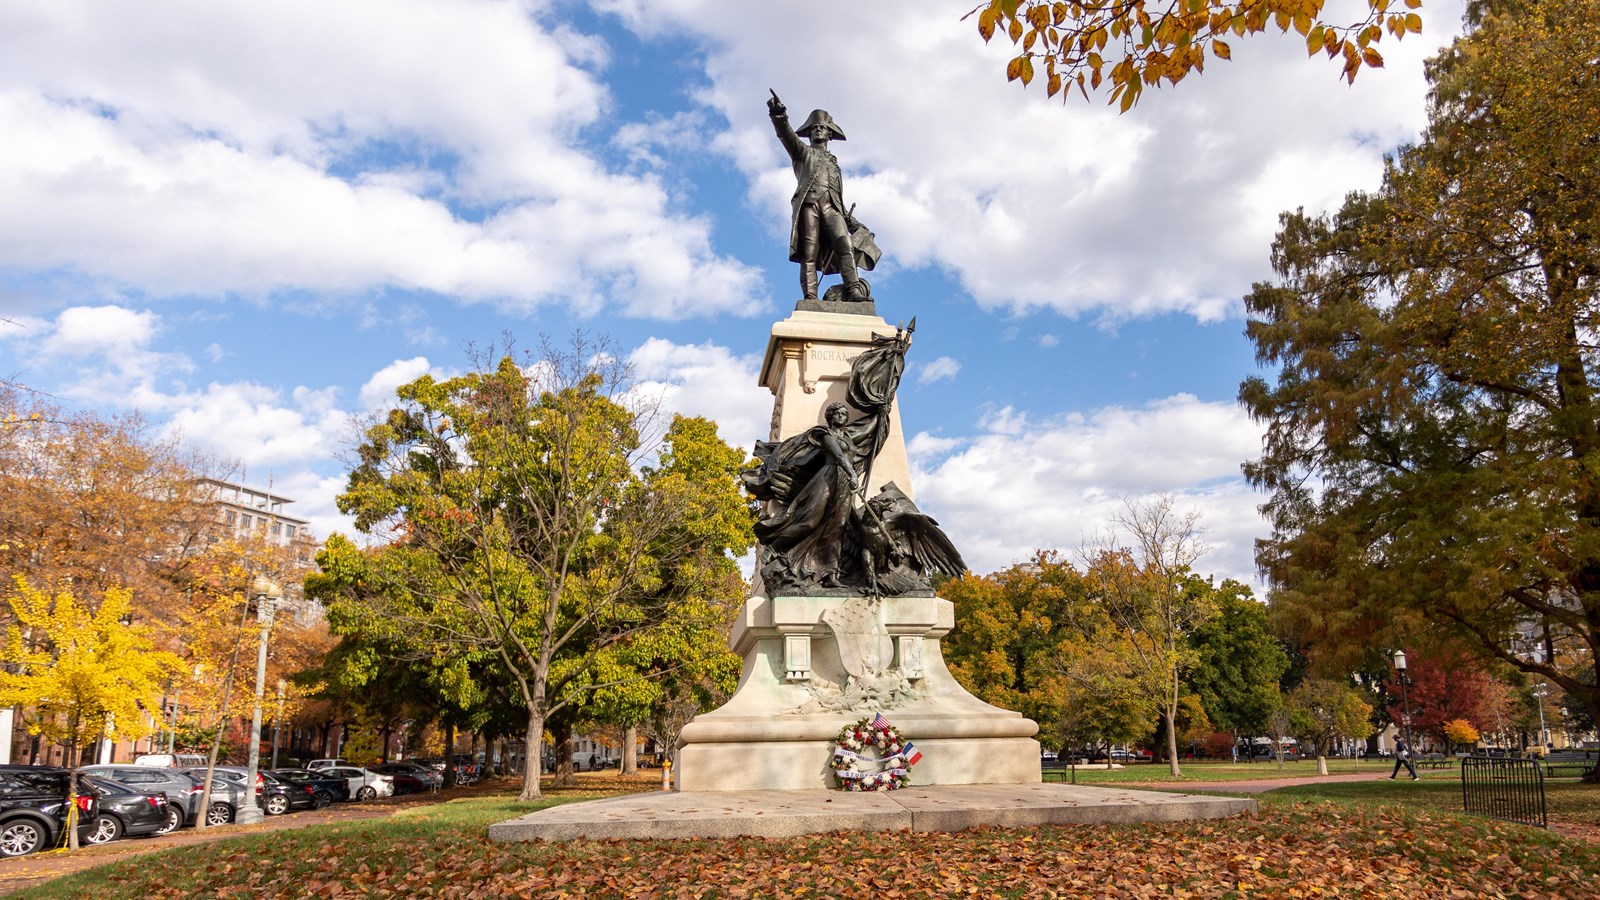 Bronze statue of Gen. Rochambeau in Revolutionary War attire atop a plinth.